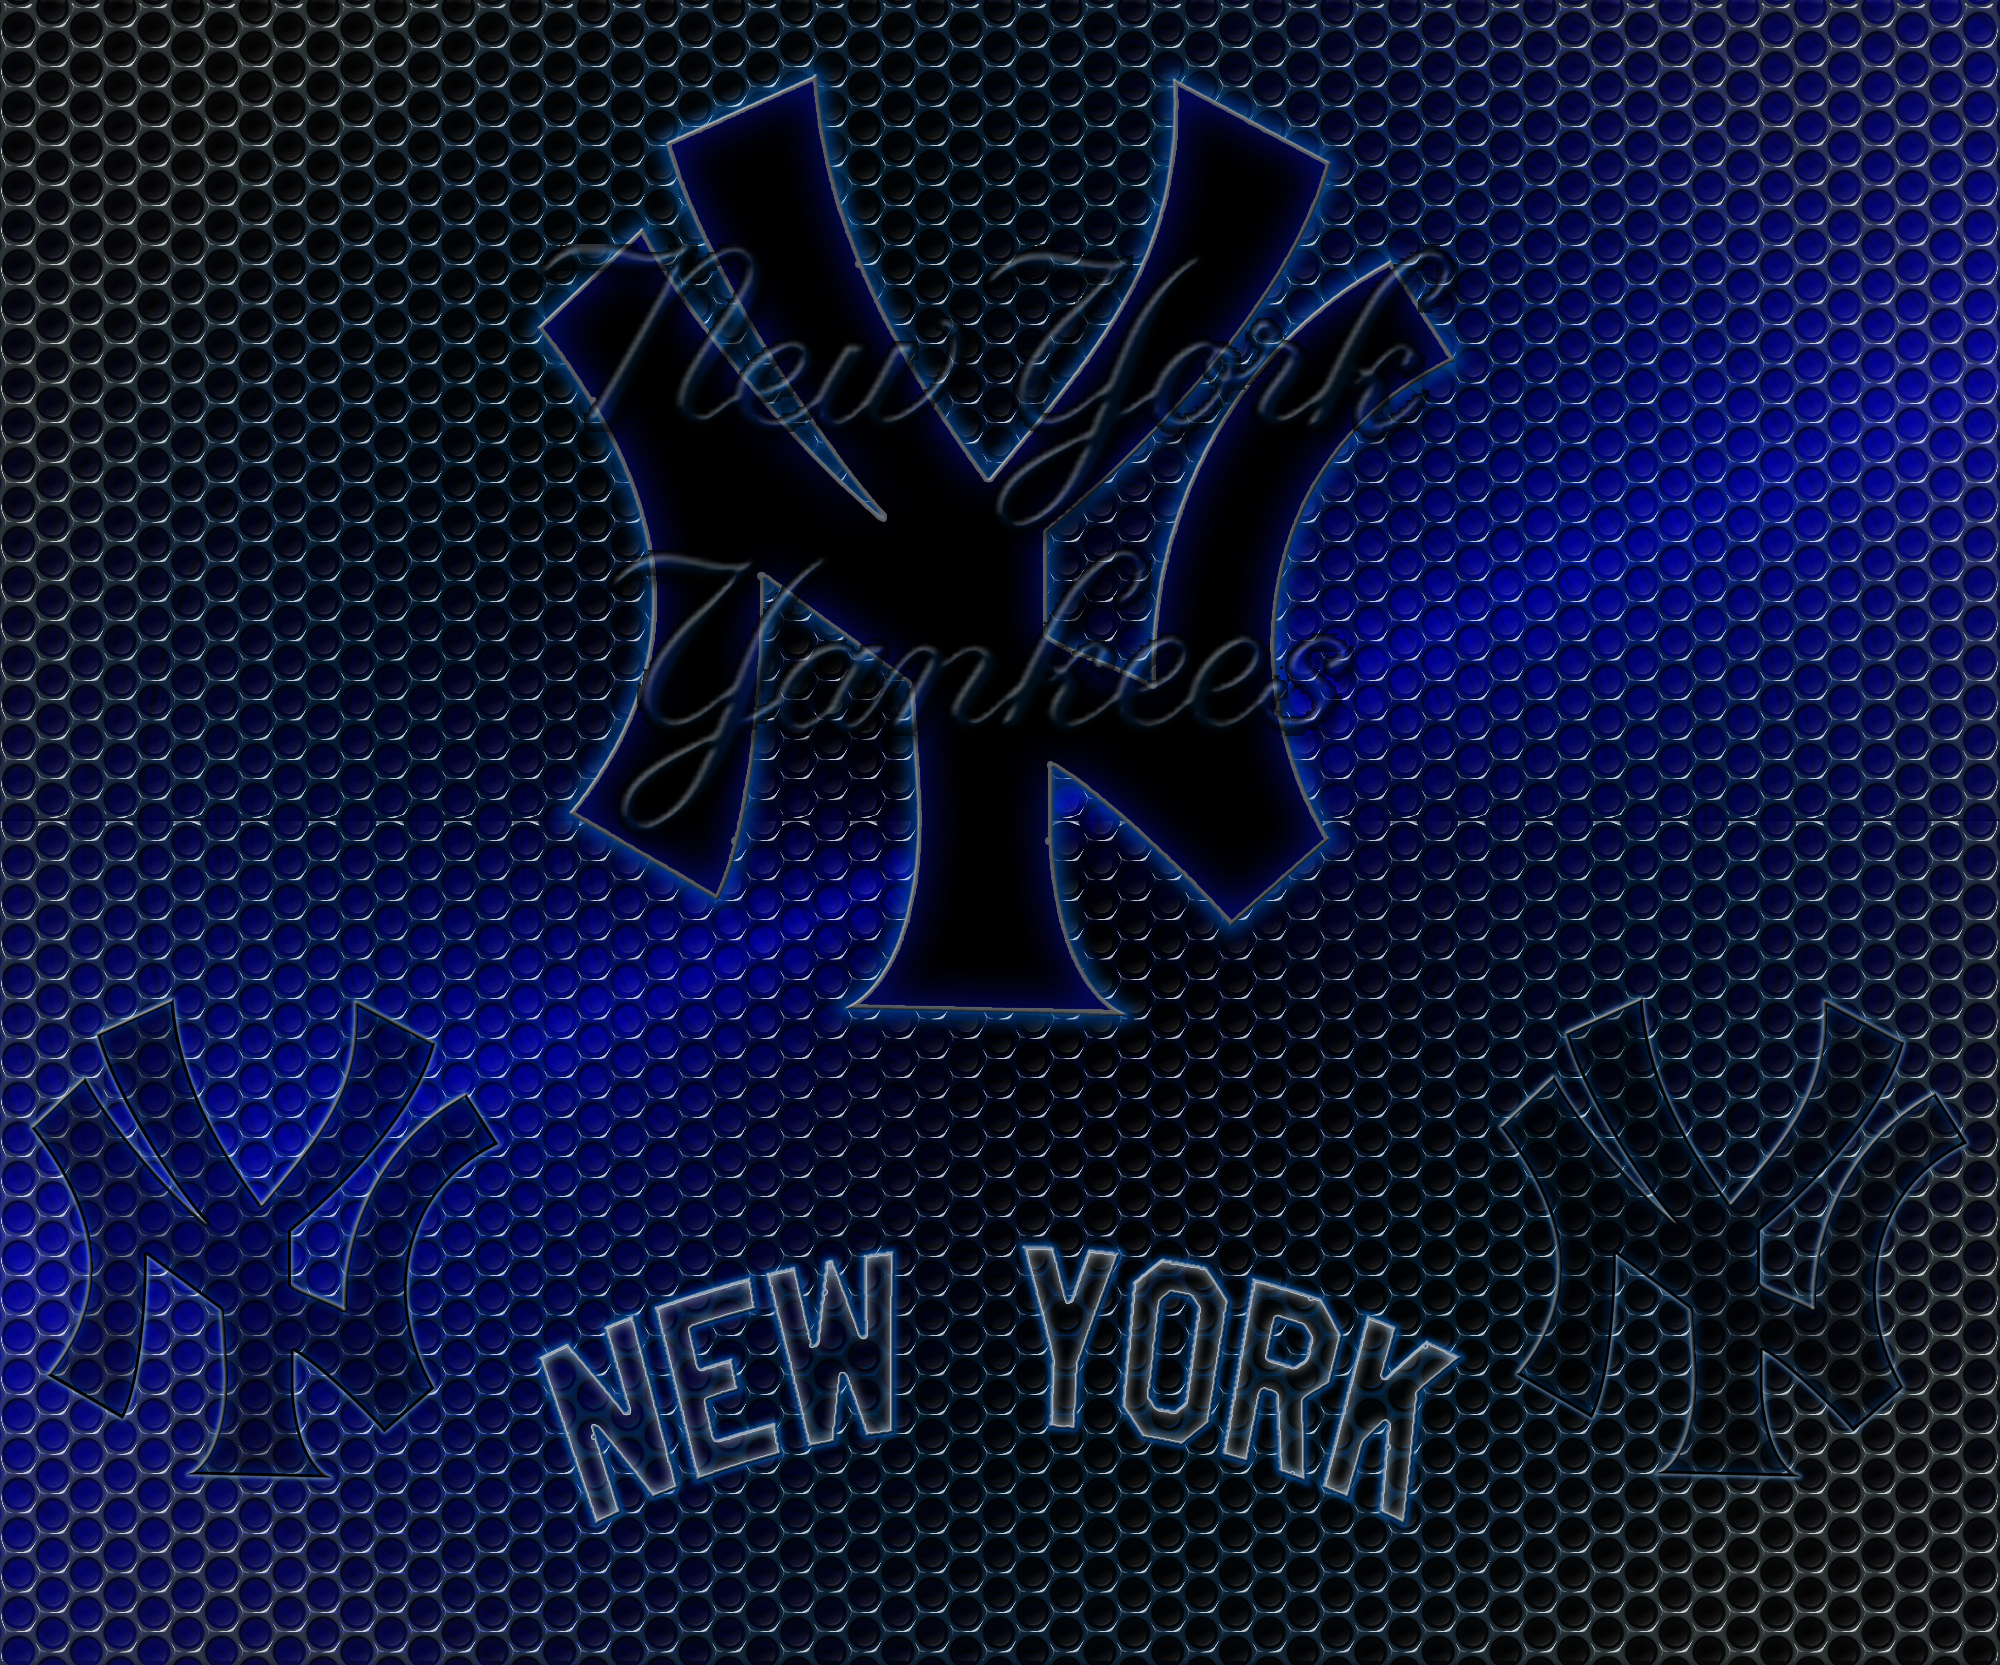 yankees de nueva york fondo de pantalla para iphone,negro,azul,fuente,azul eléctrico,texto